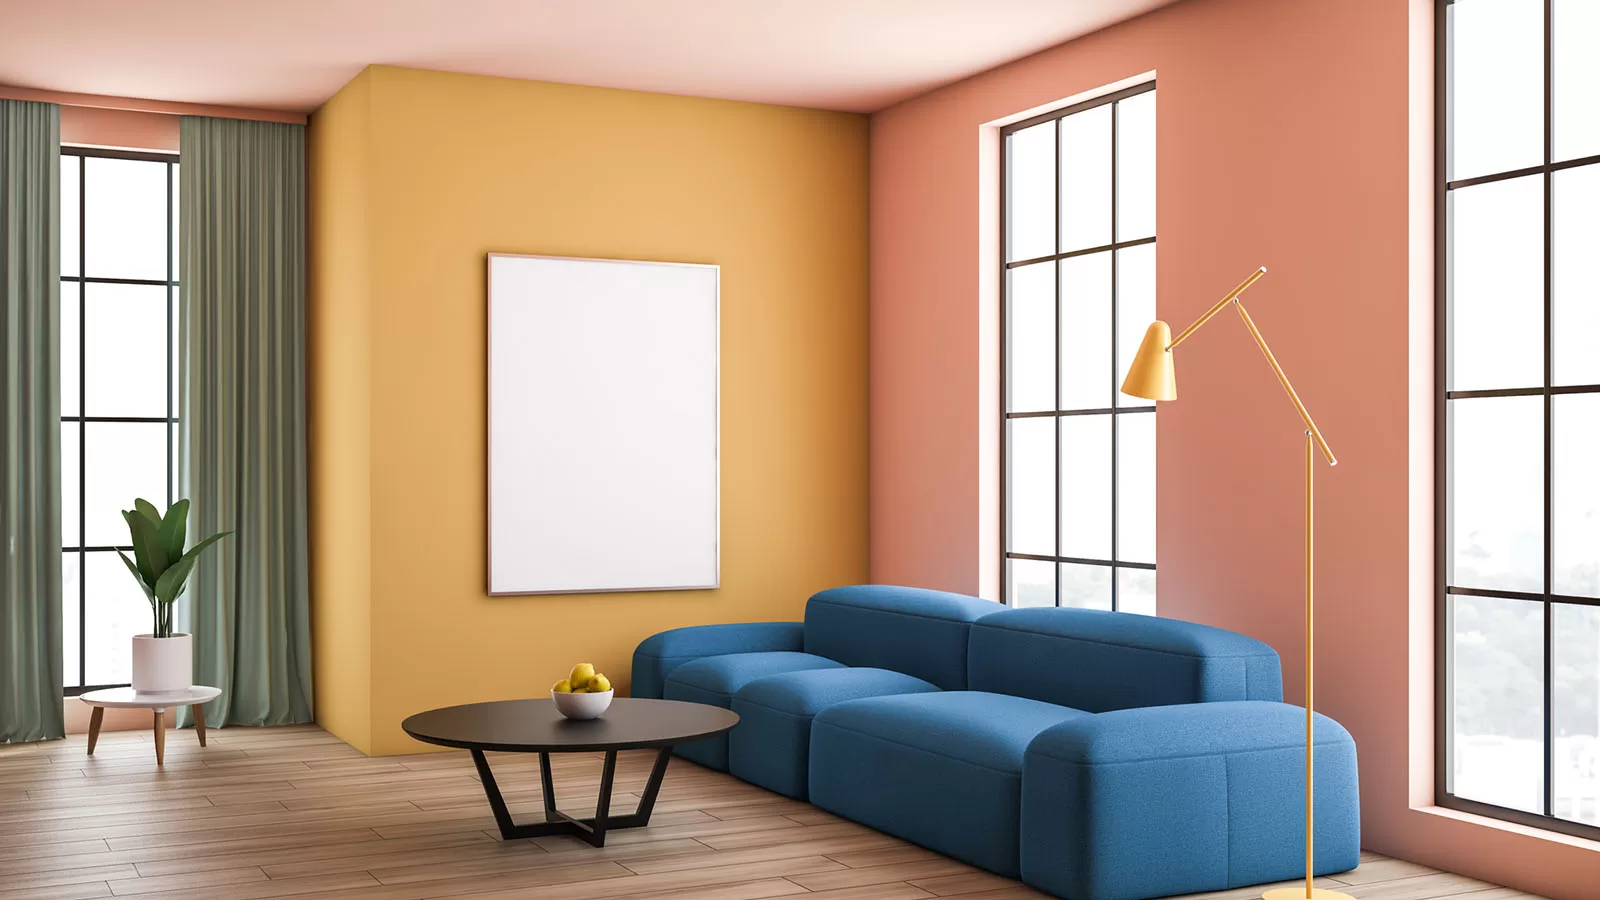 Less is More: 7 Ways Minimizing Your Stuff Maximizes Apartment Living